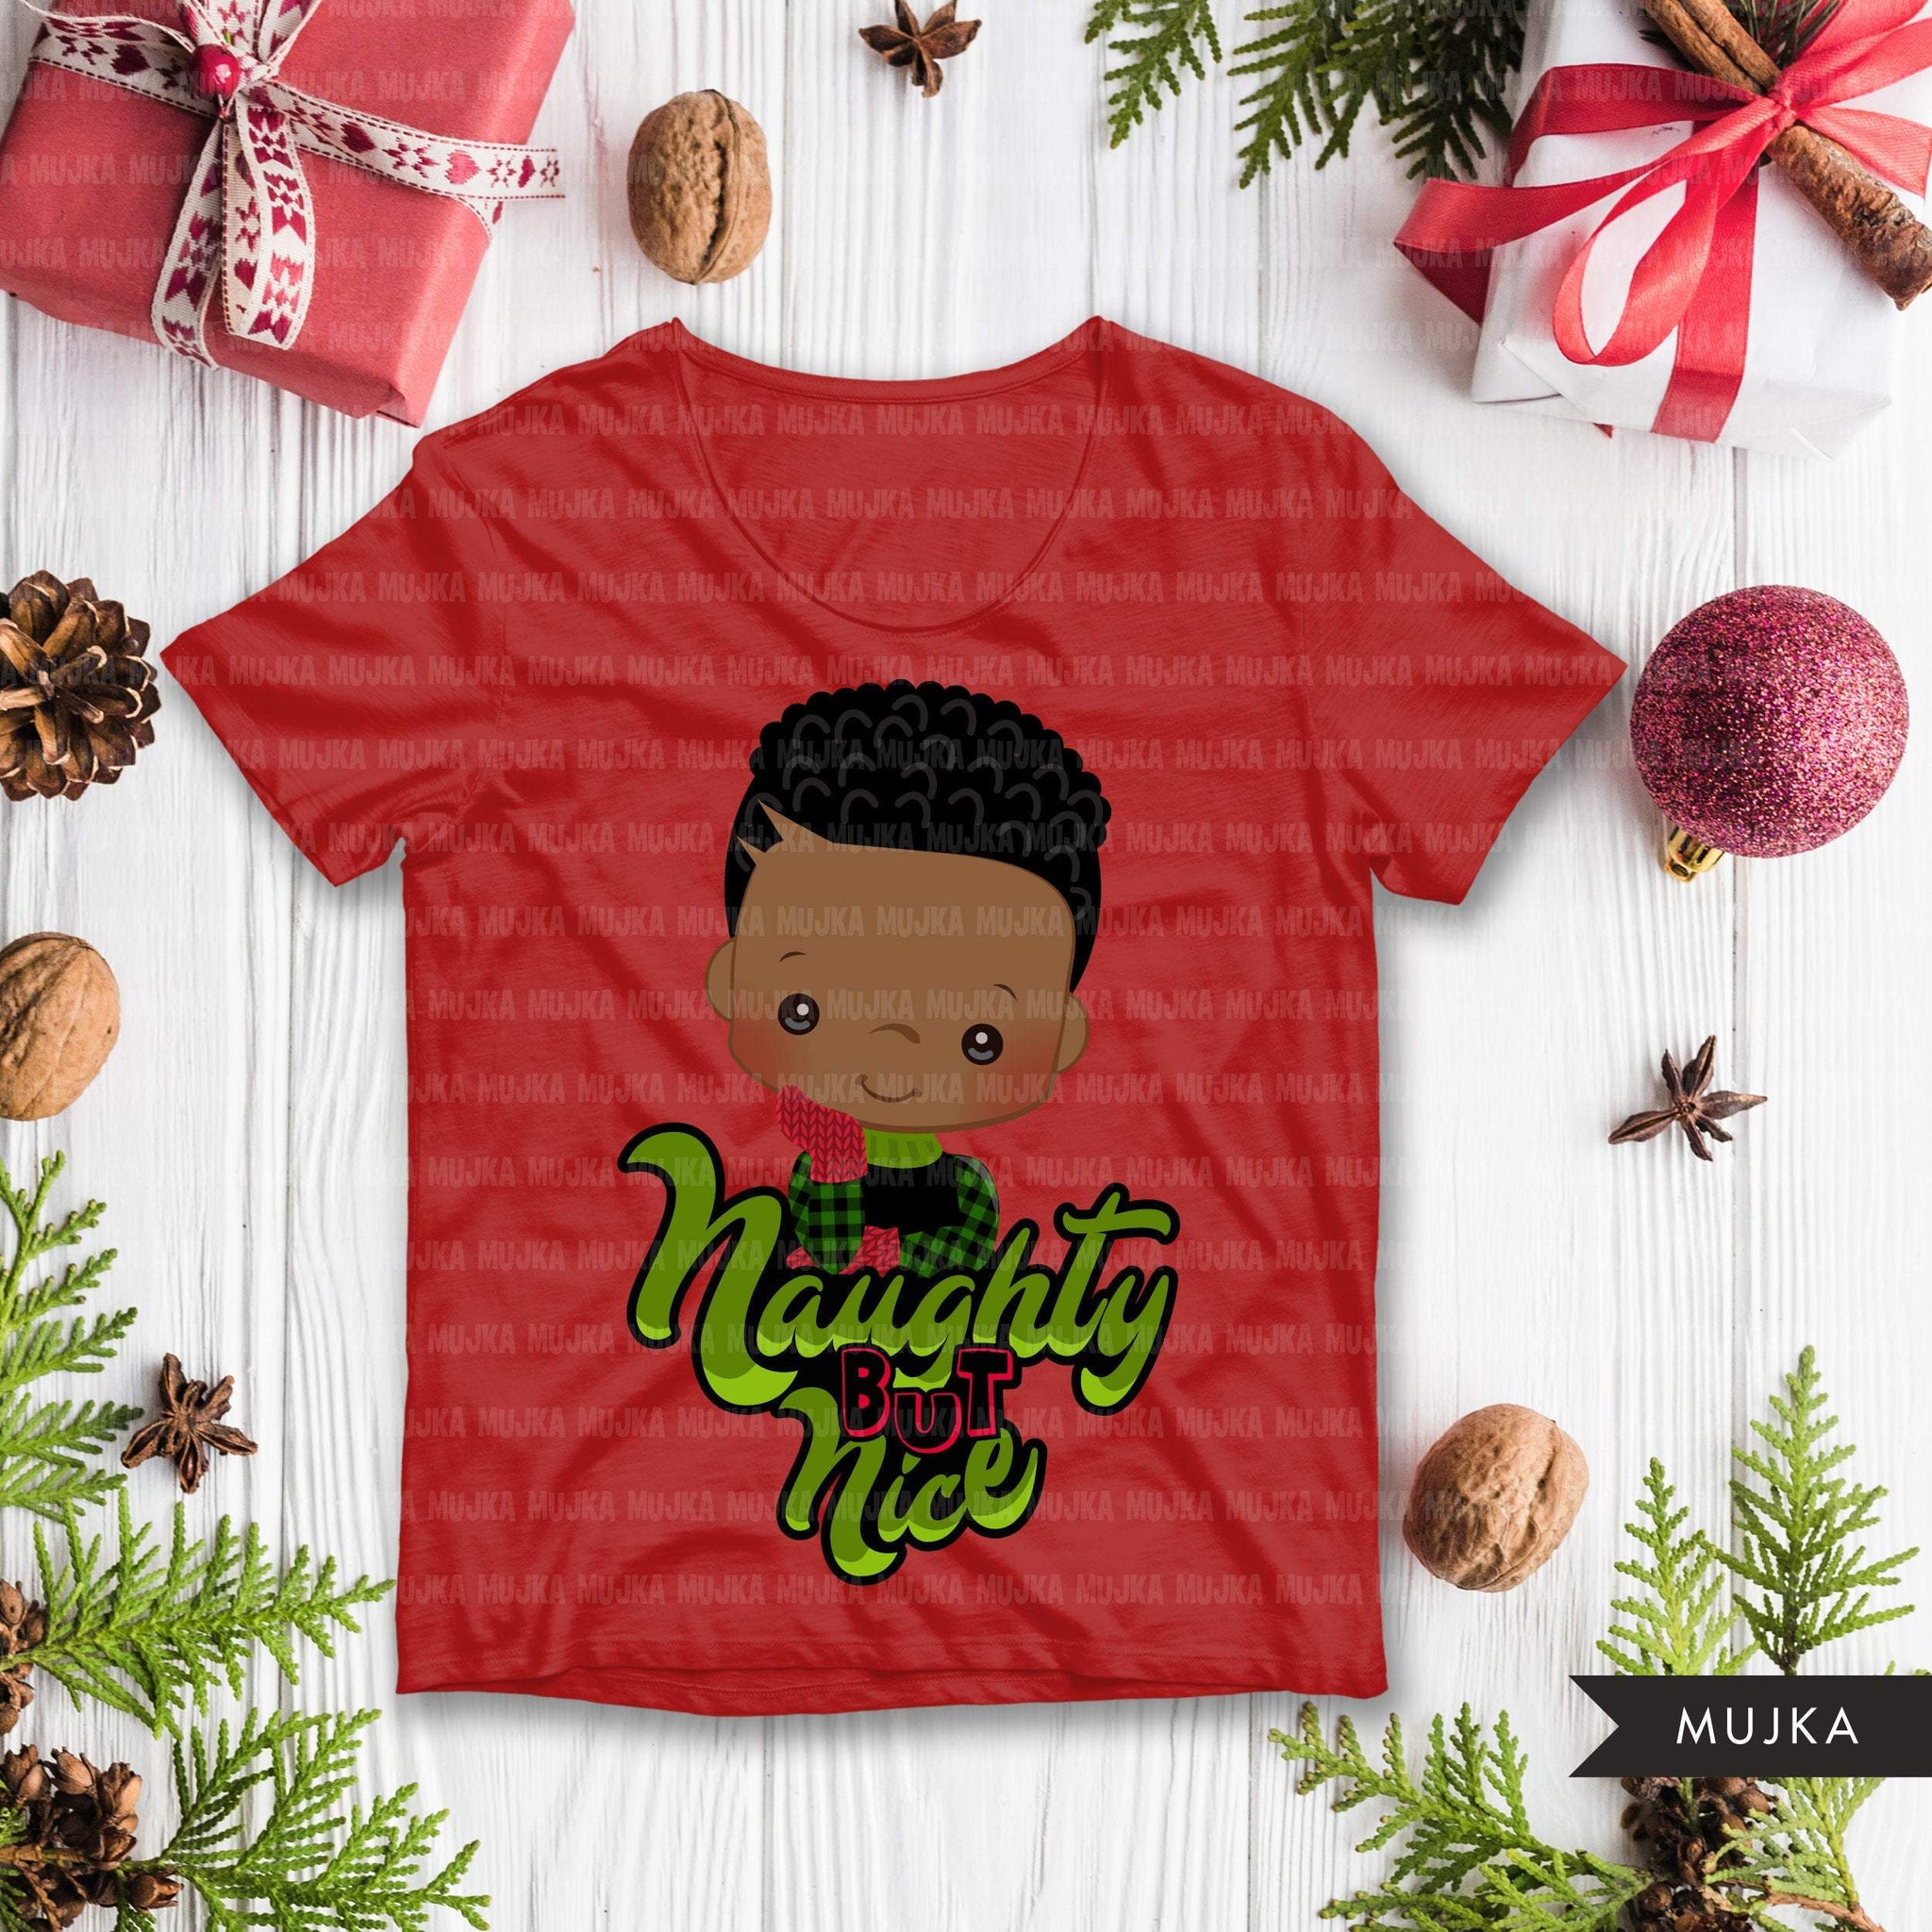 Christmas PNG digital, Naughty and Nice Printable HTV sublimation image transfer clipart, t-shirt Afro black boy graphics